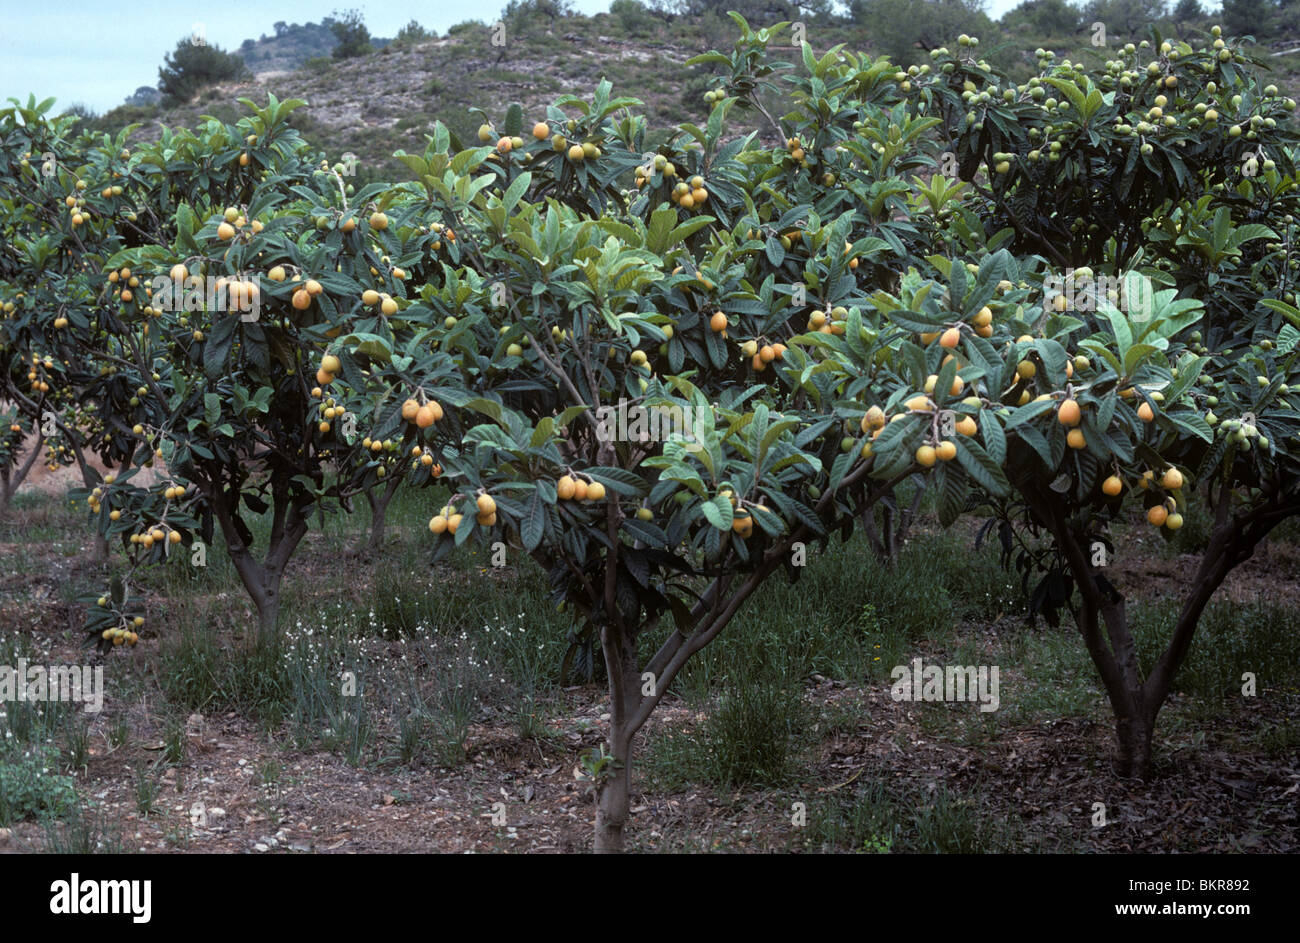 Loquat tree with ripe fruit, Valencia, Spain Stock Photo